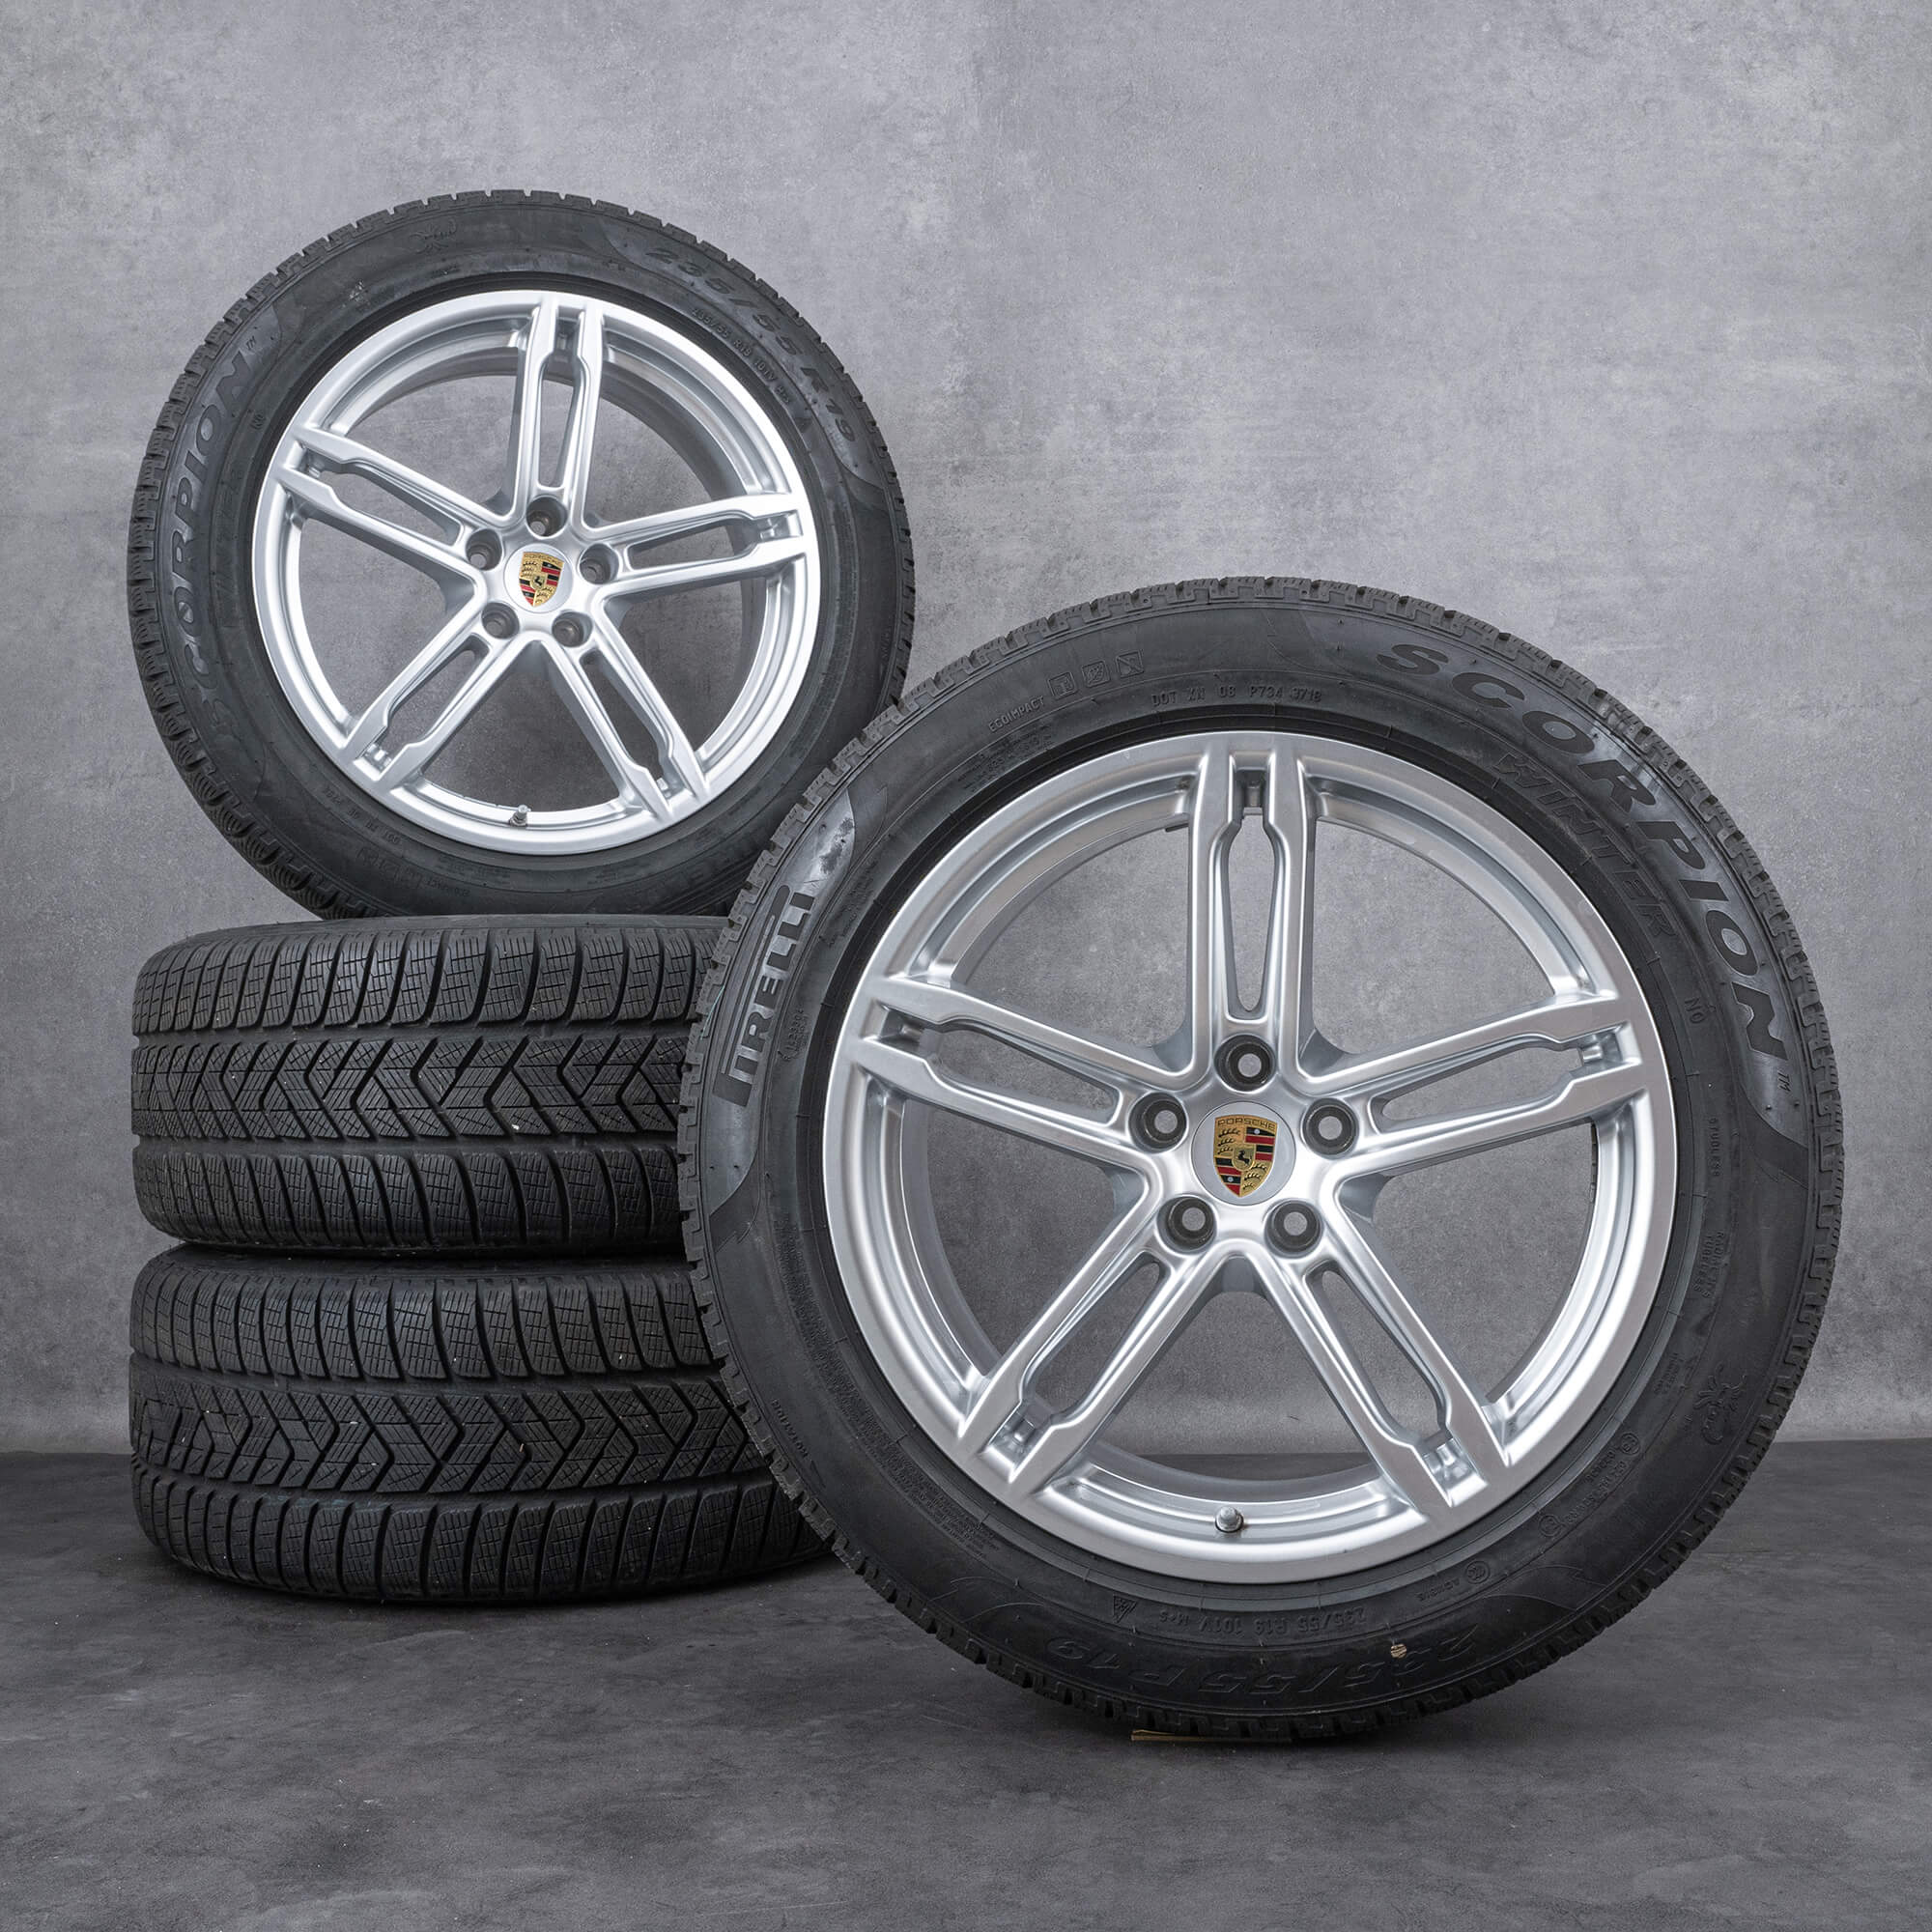 Original Porsche 19 inch rims Macan 95B winter tires winter wheels Pirelli